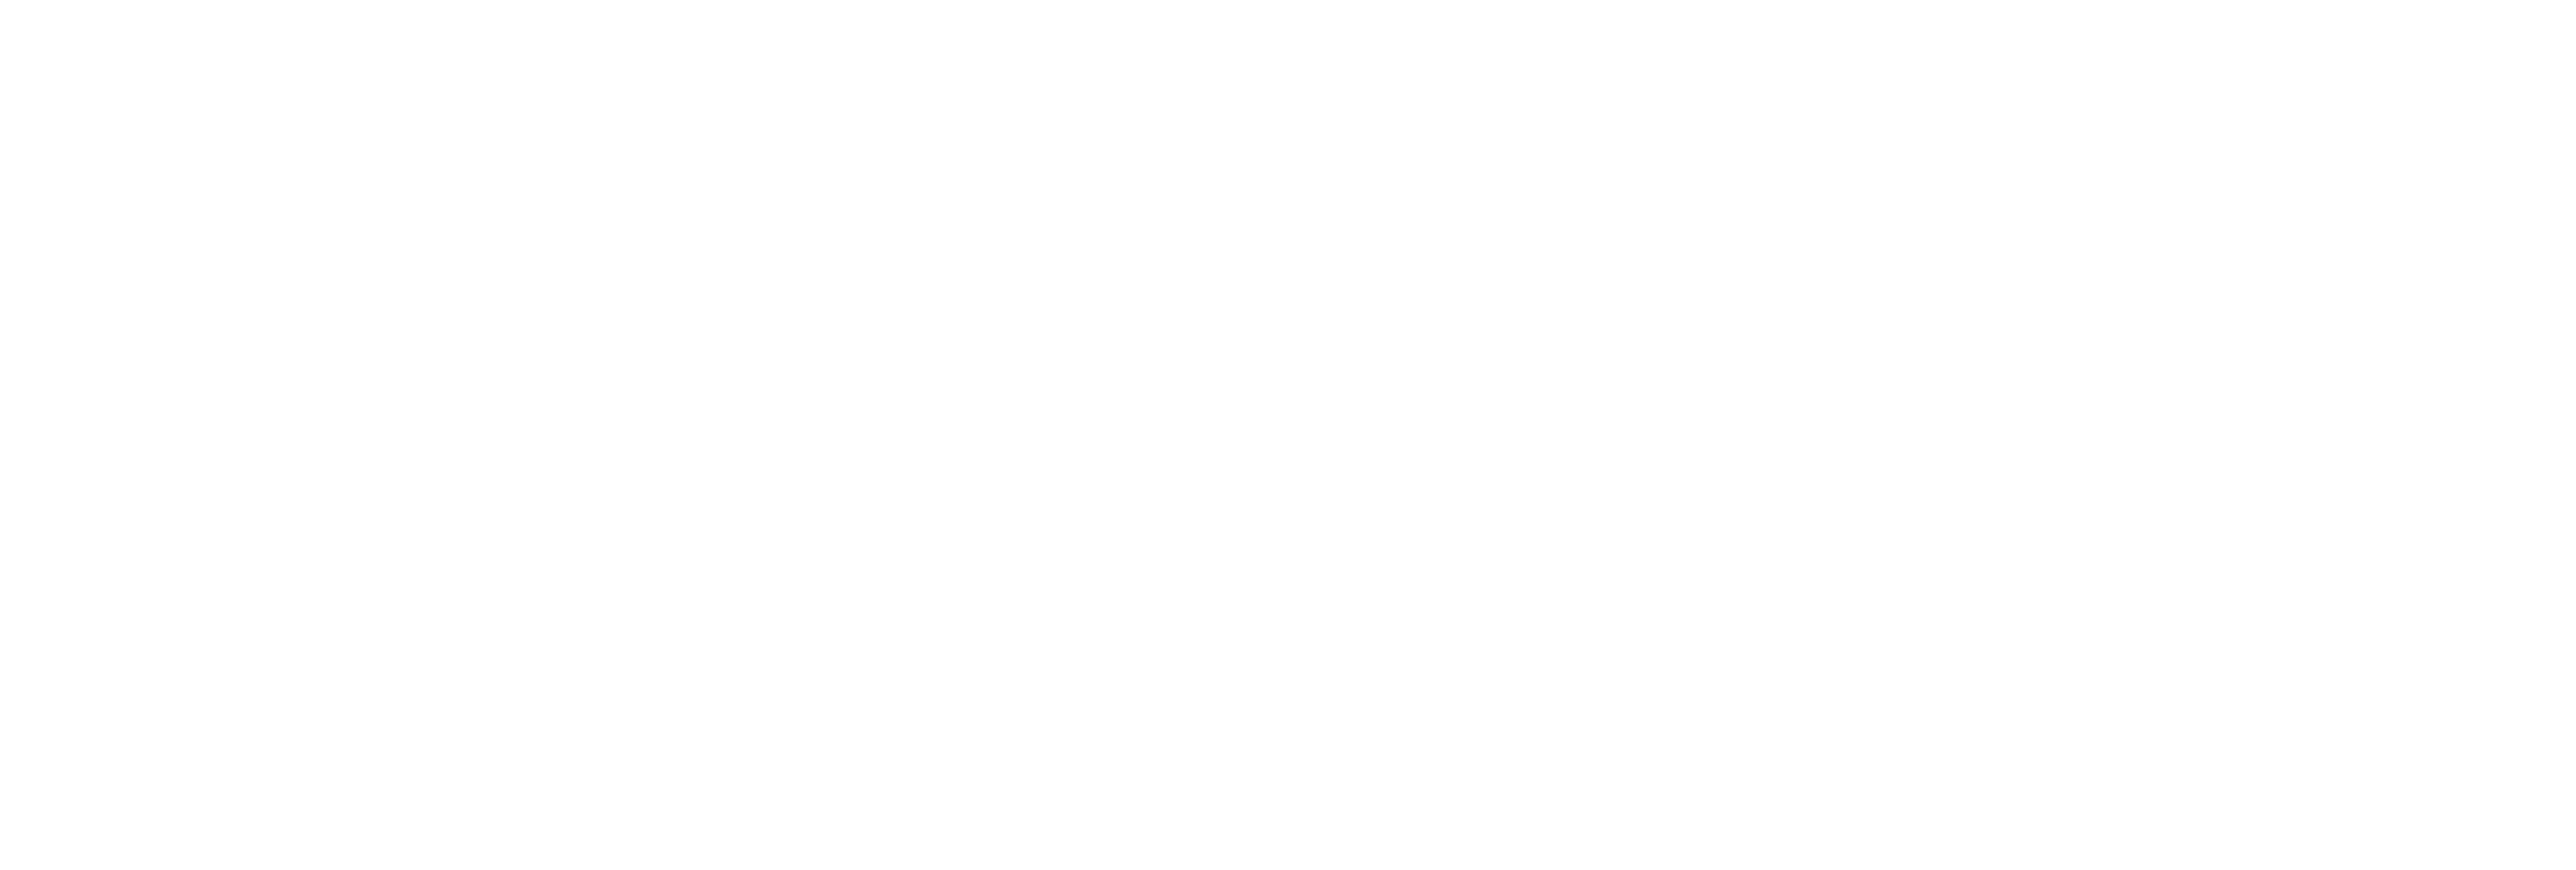 AniCura San Francisco Hospital Veterinario logo